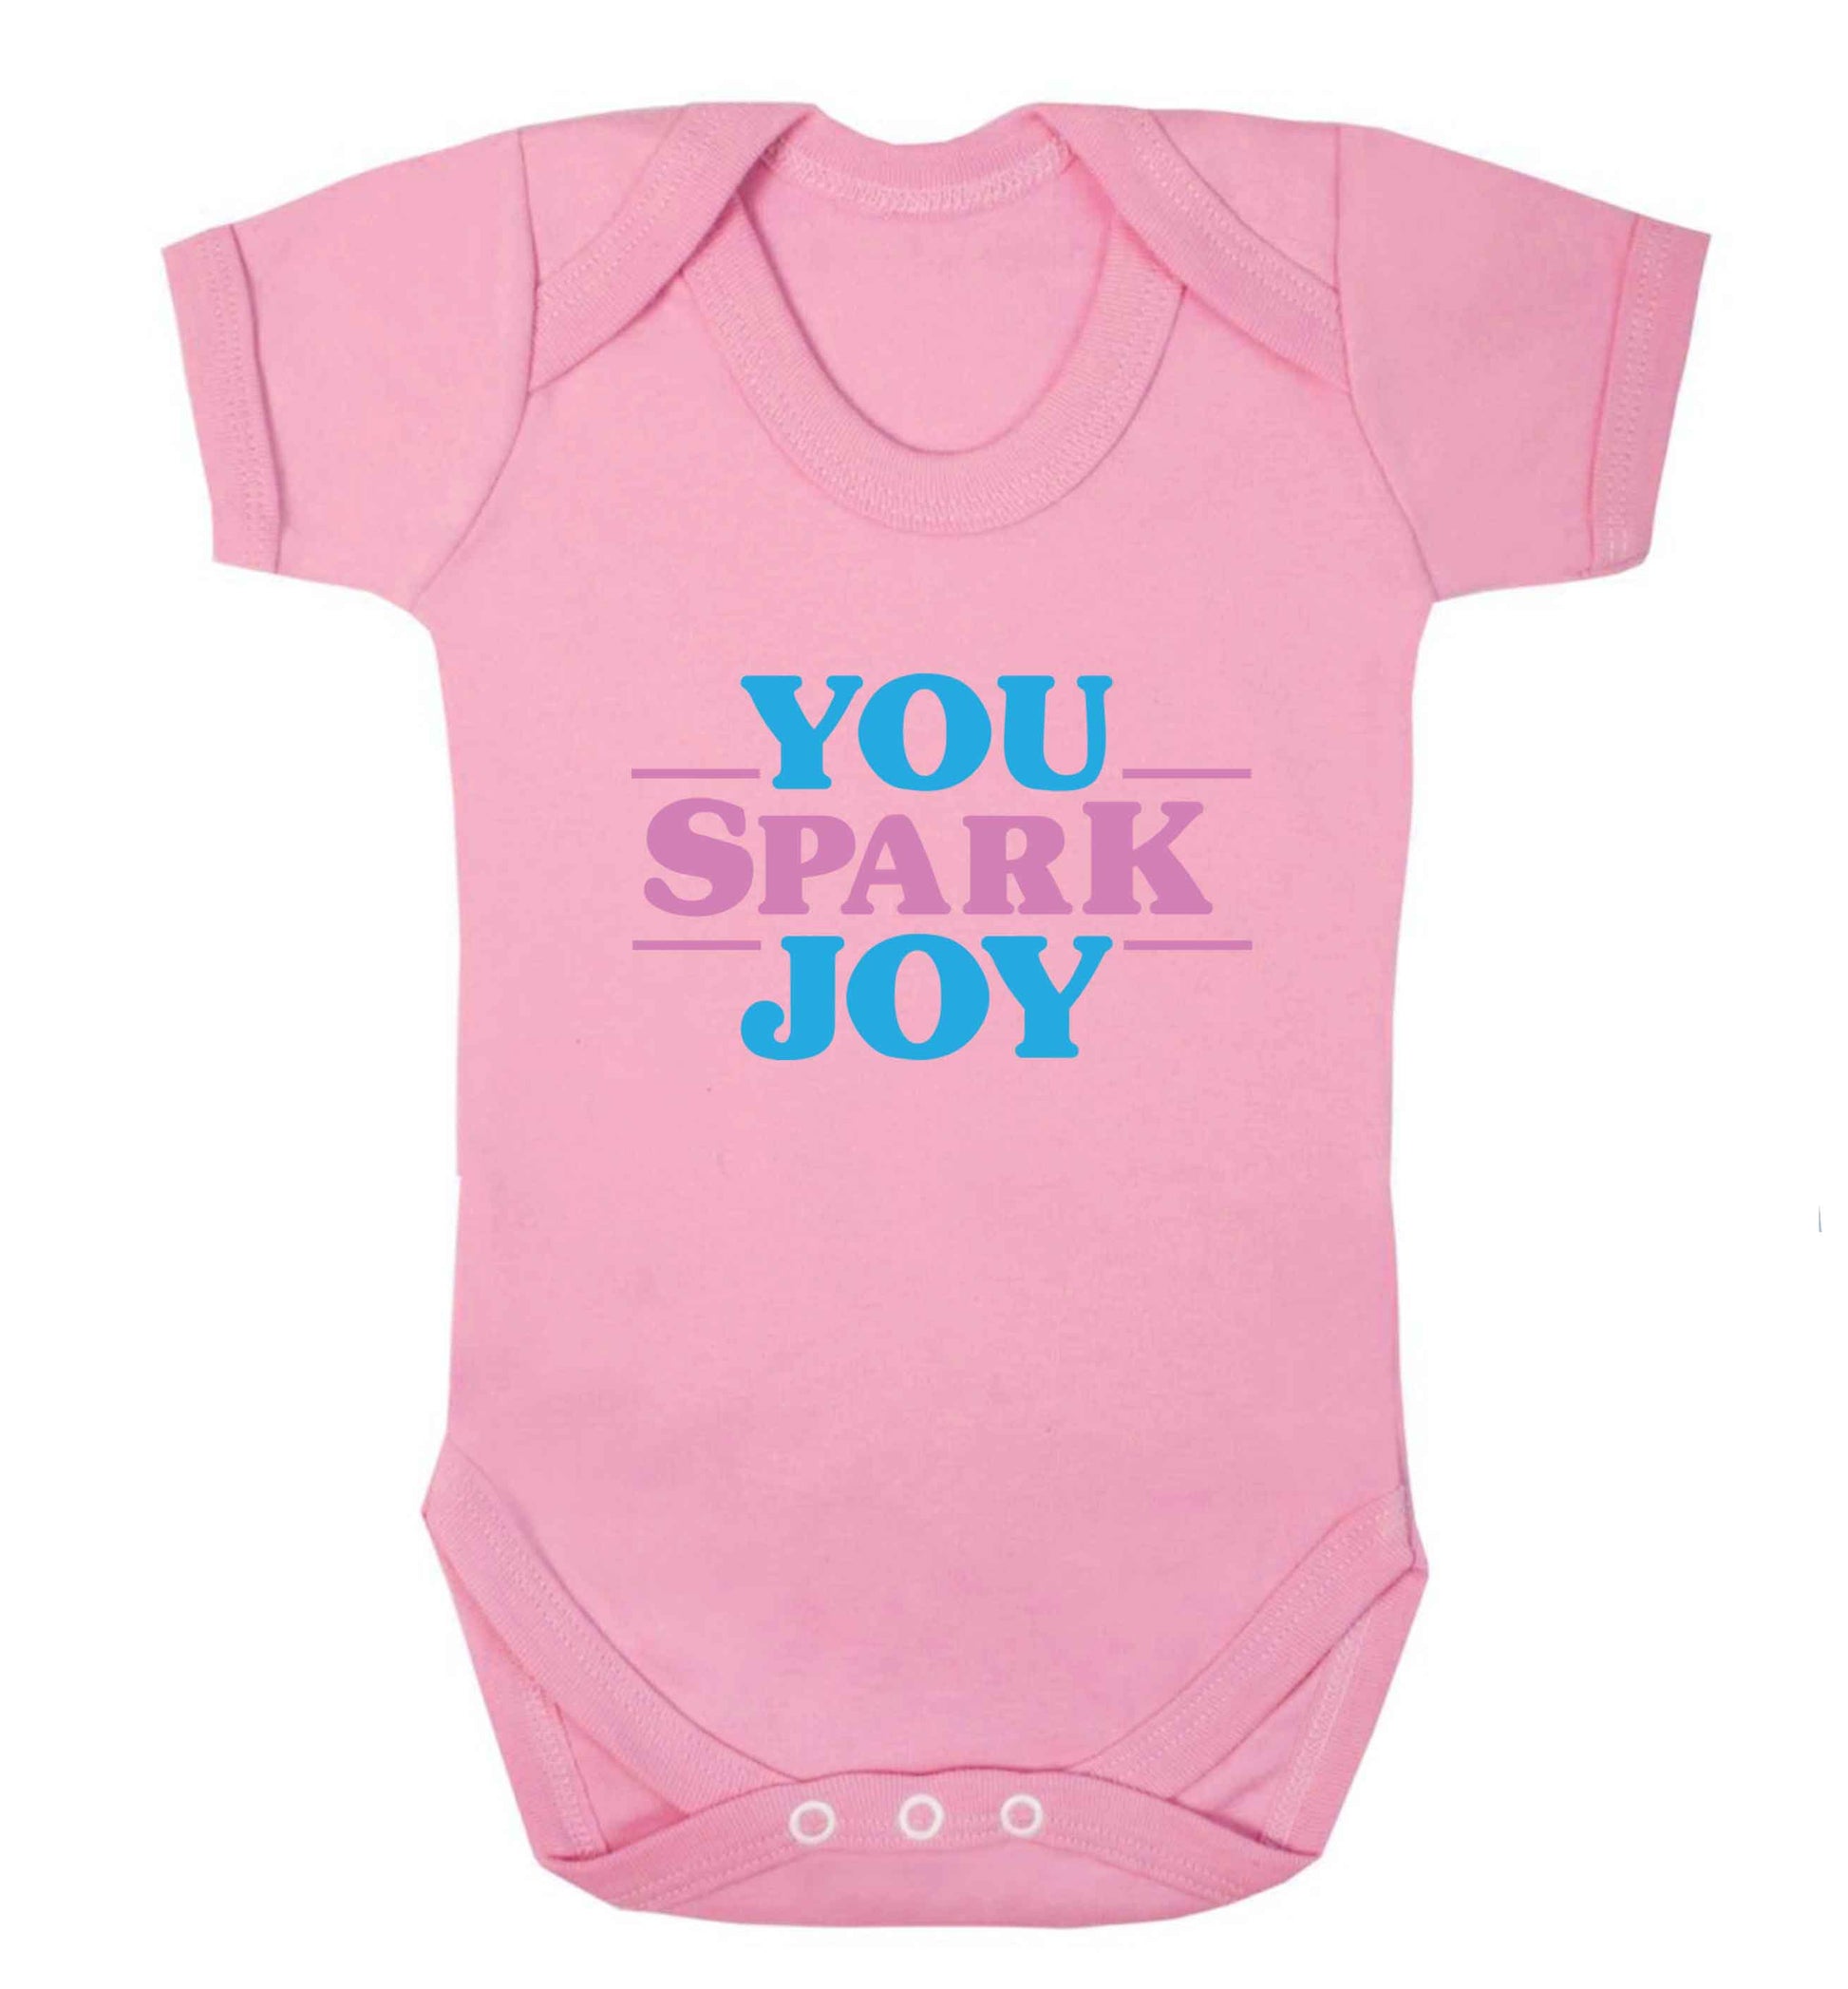 You spark joy baby vest pale pink 18-24 months